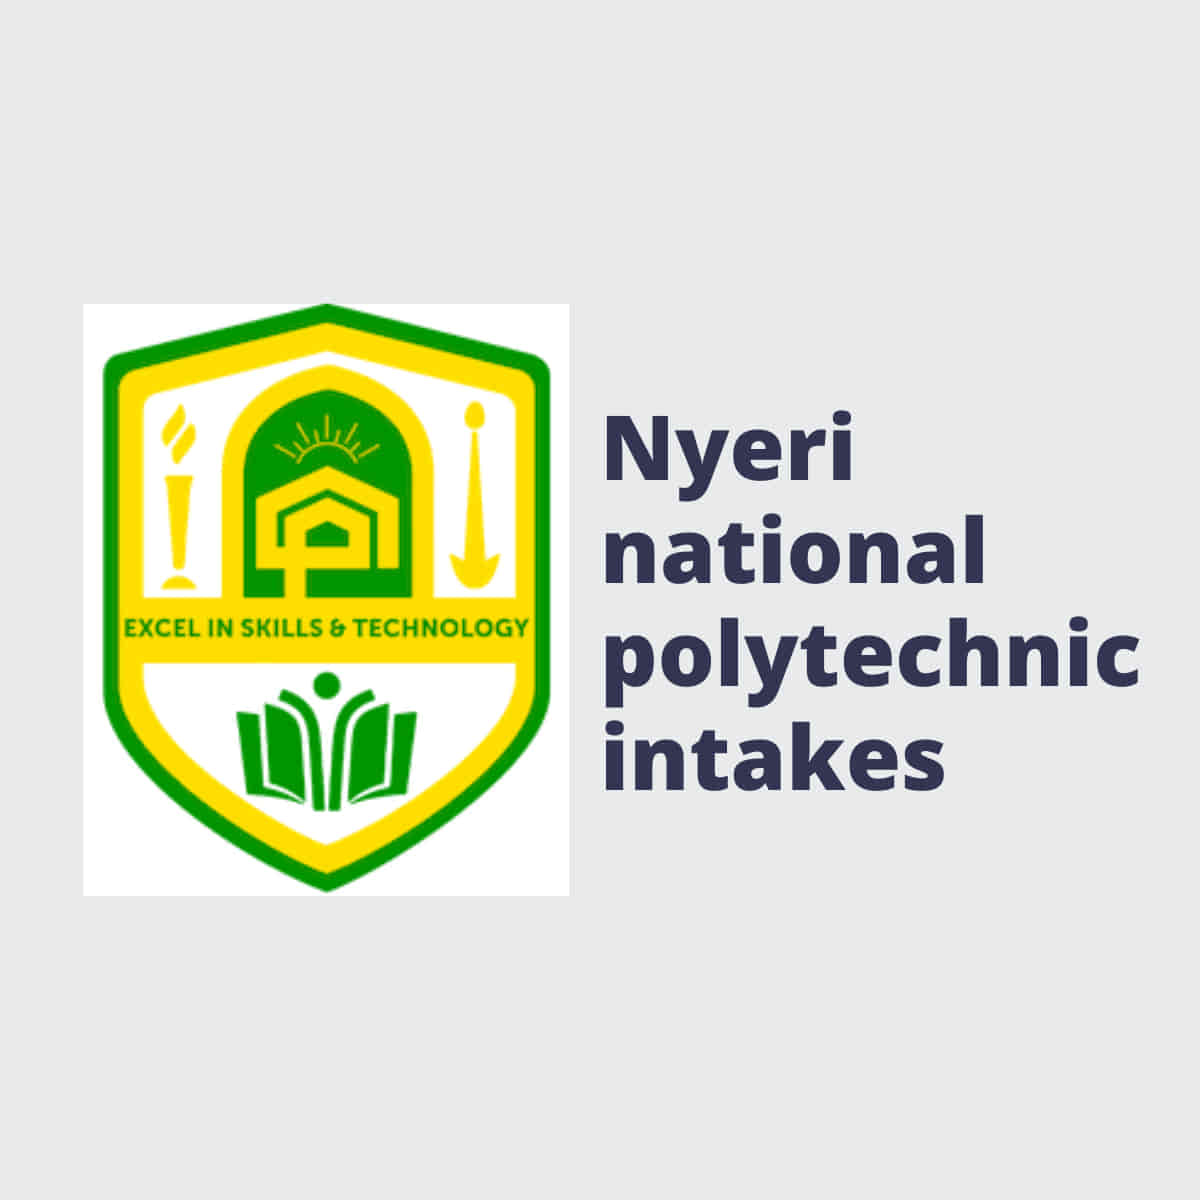 Nyeri national polytechnic intakes